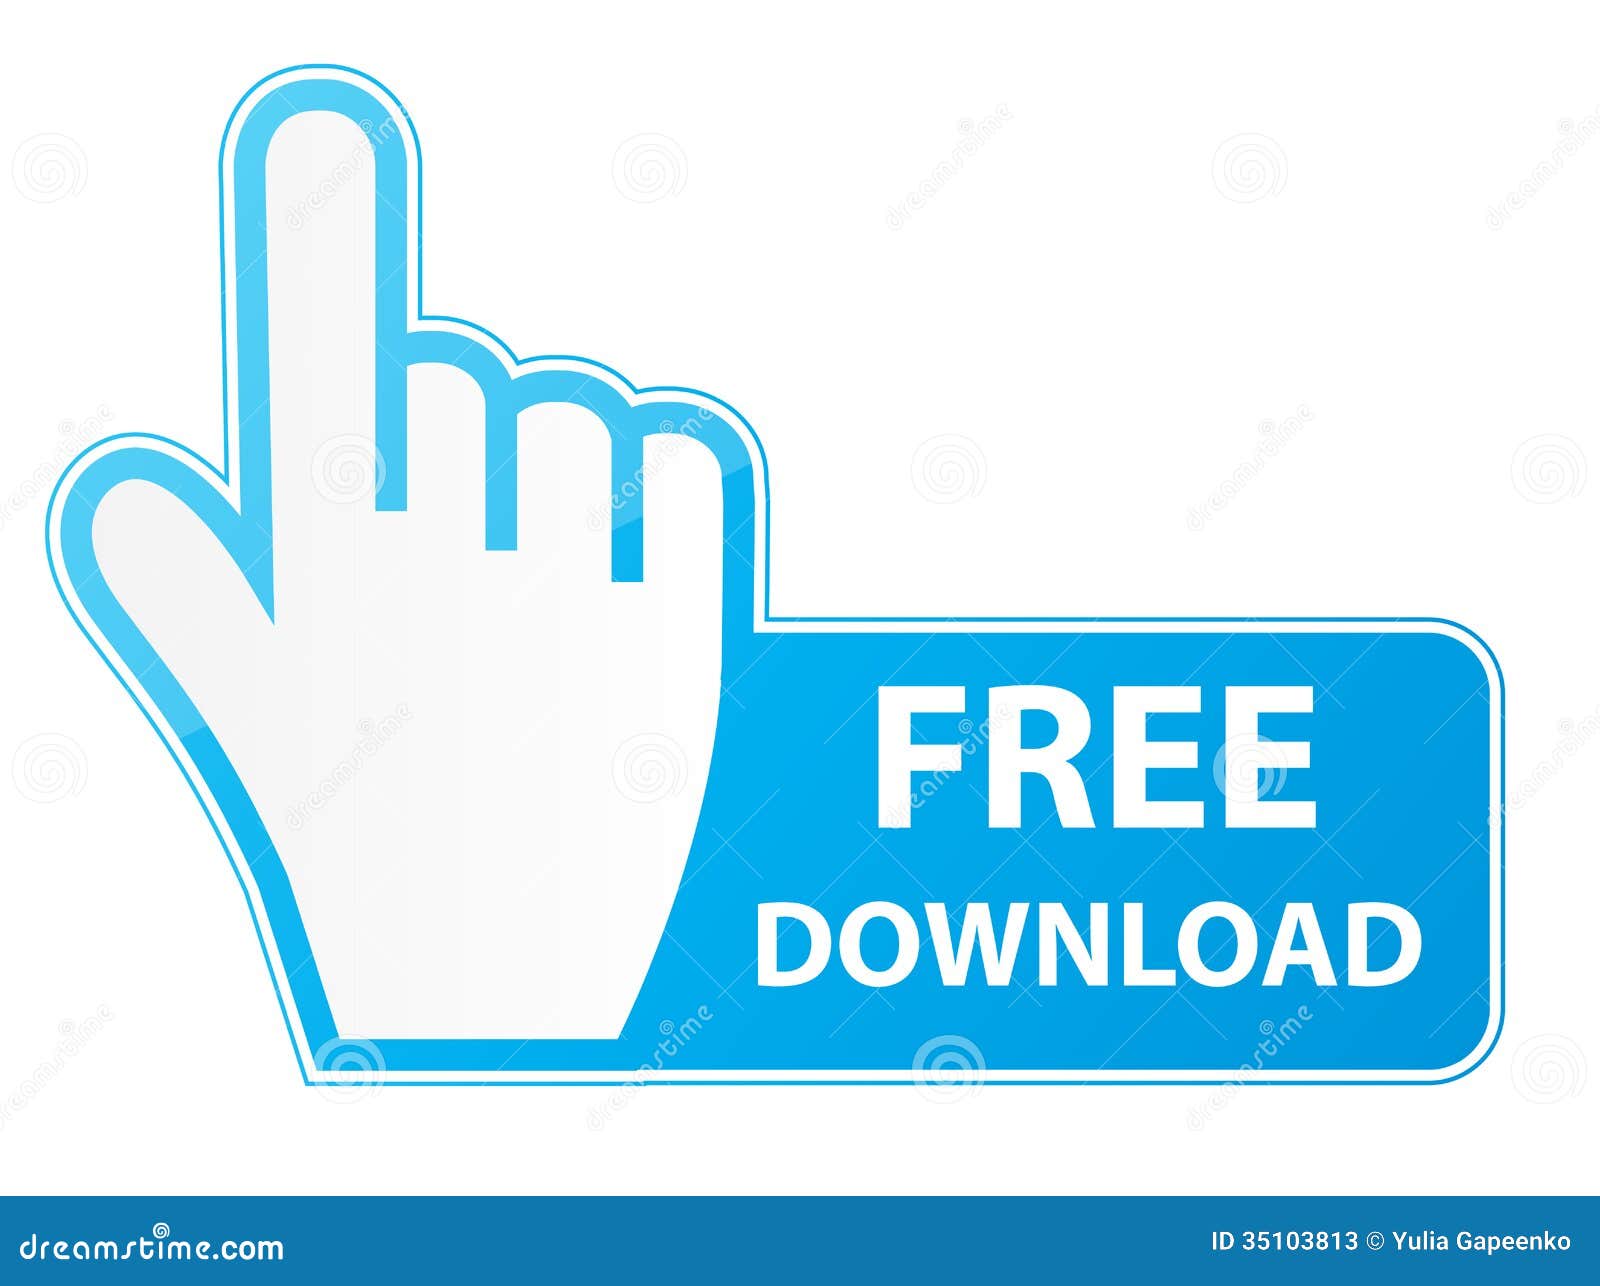 AutoCAD Crack  Free Download [Latest 2022]